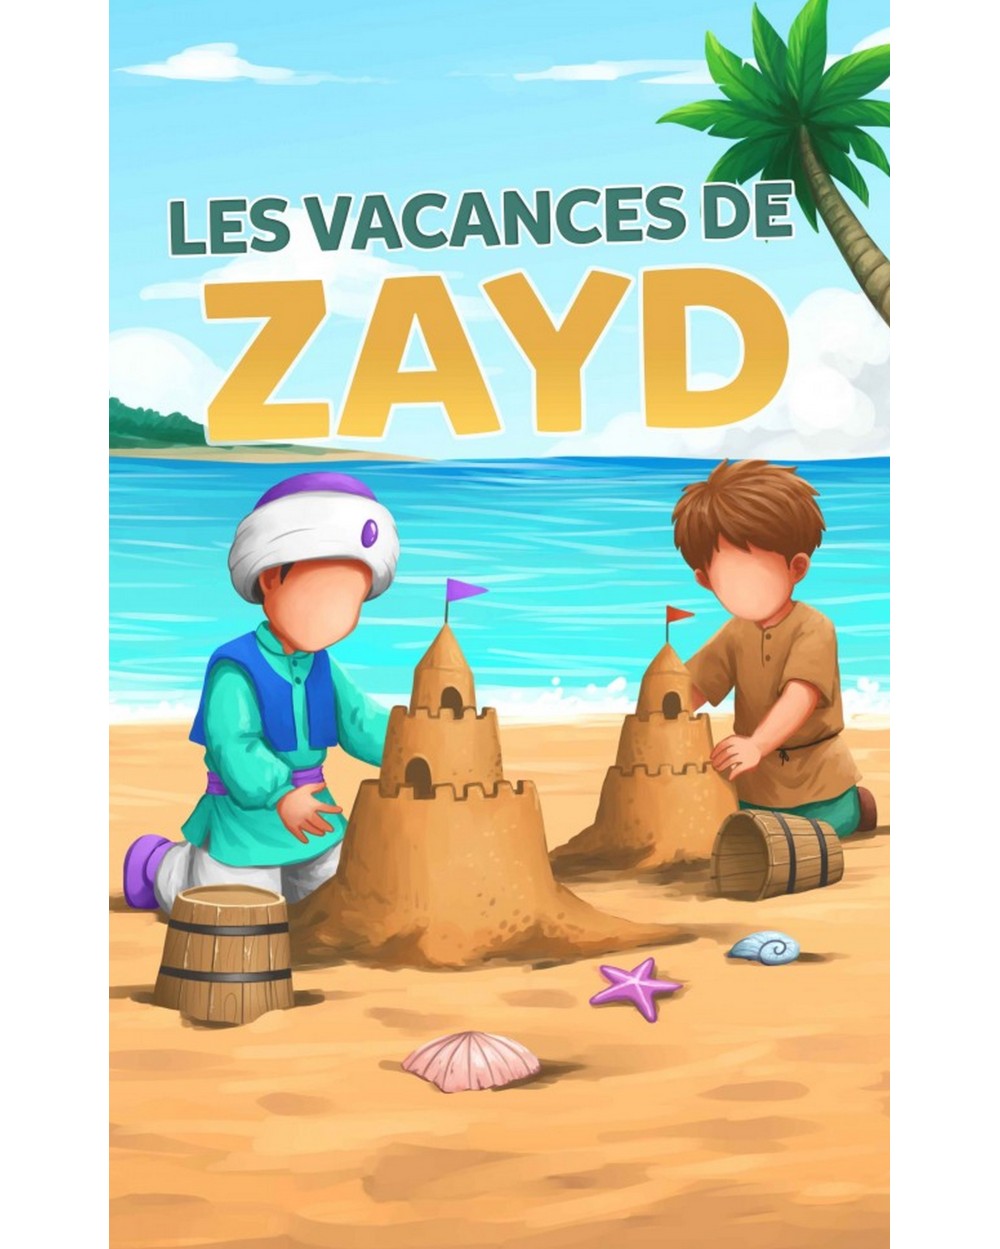 ZAYD's vacation - Muslimkid